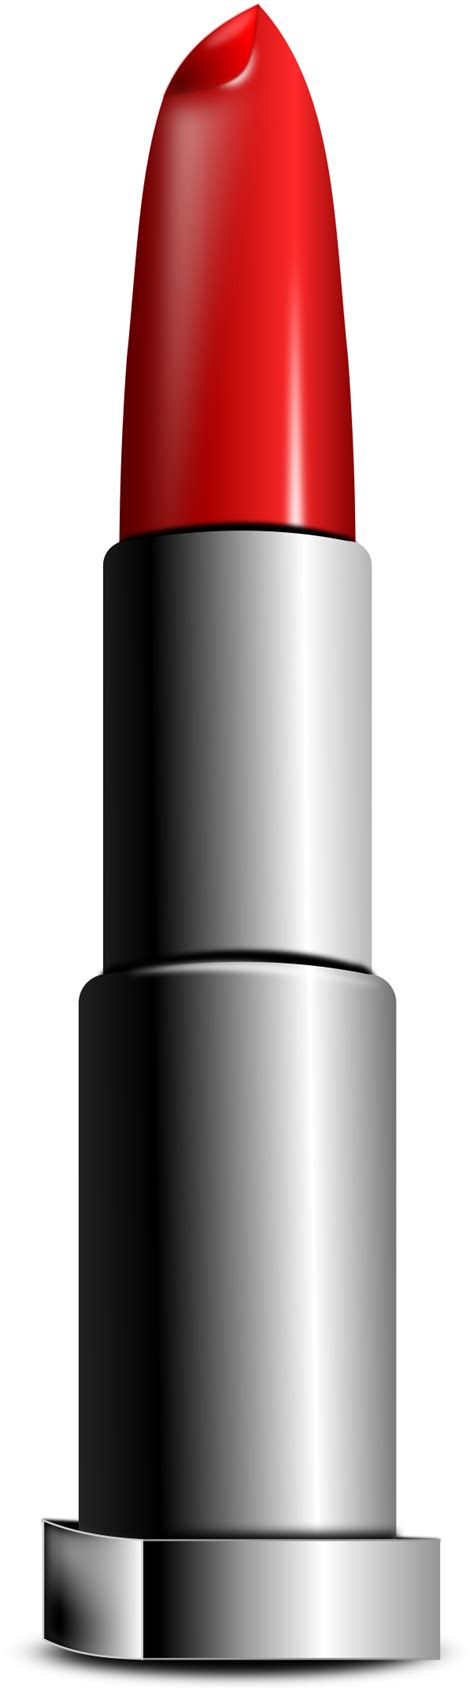 Drawing Lipstick Mac Lipstick Clip Art Png Download Large Size